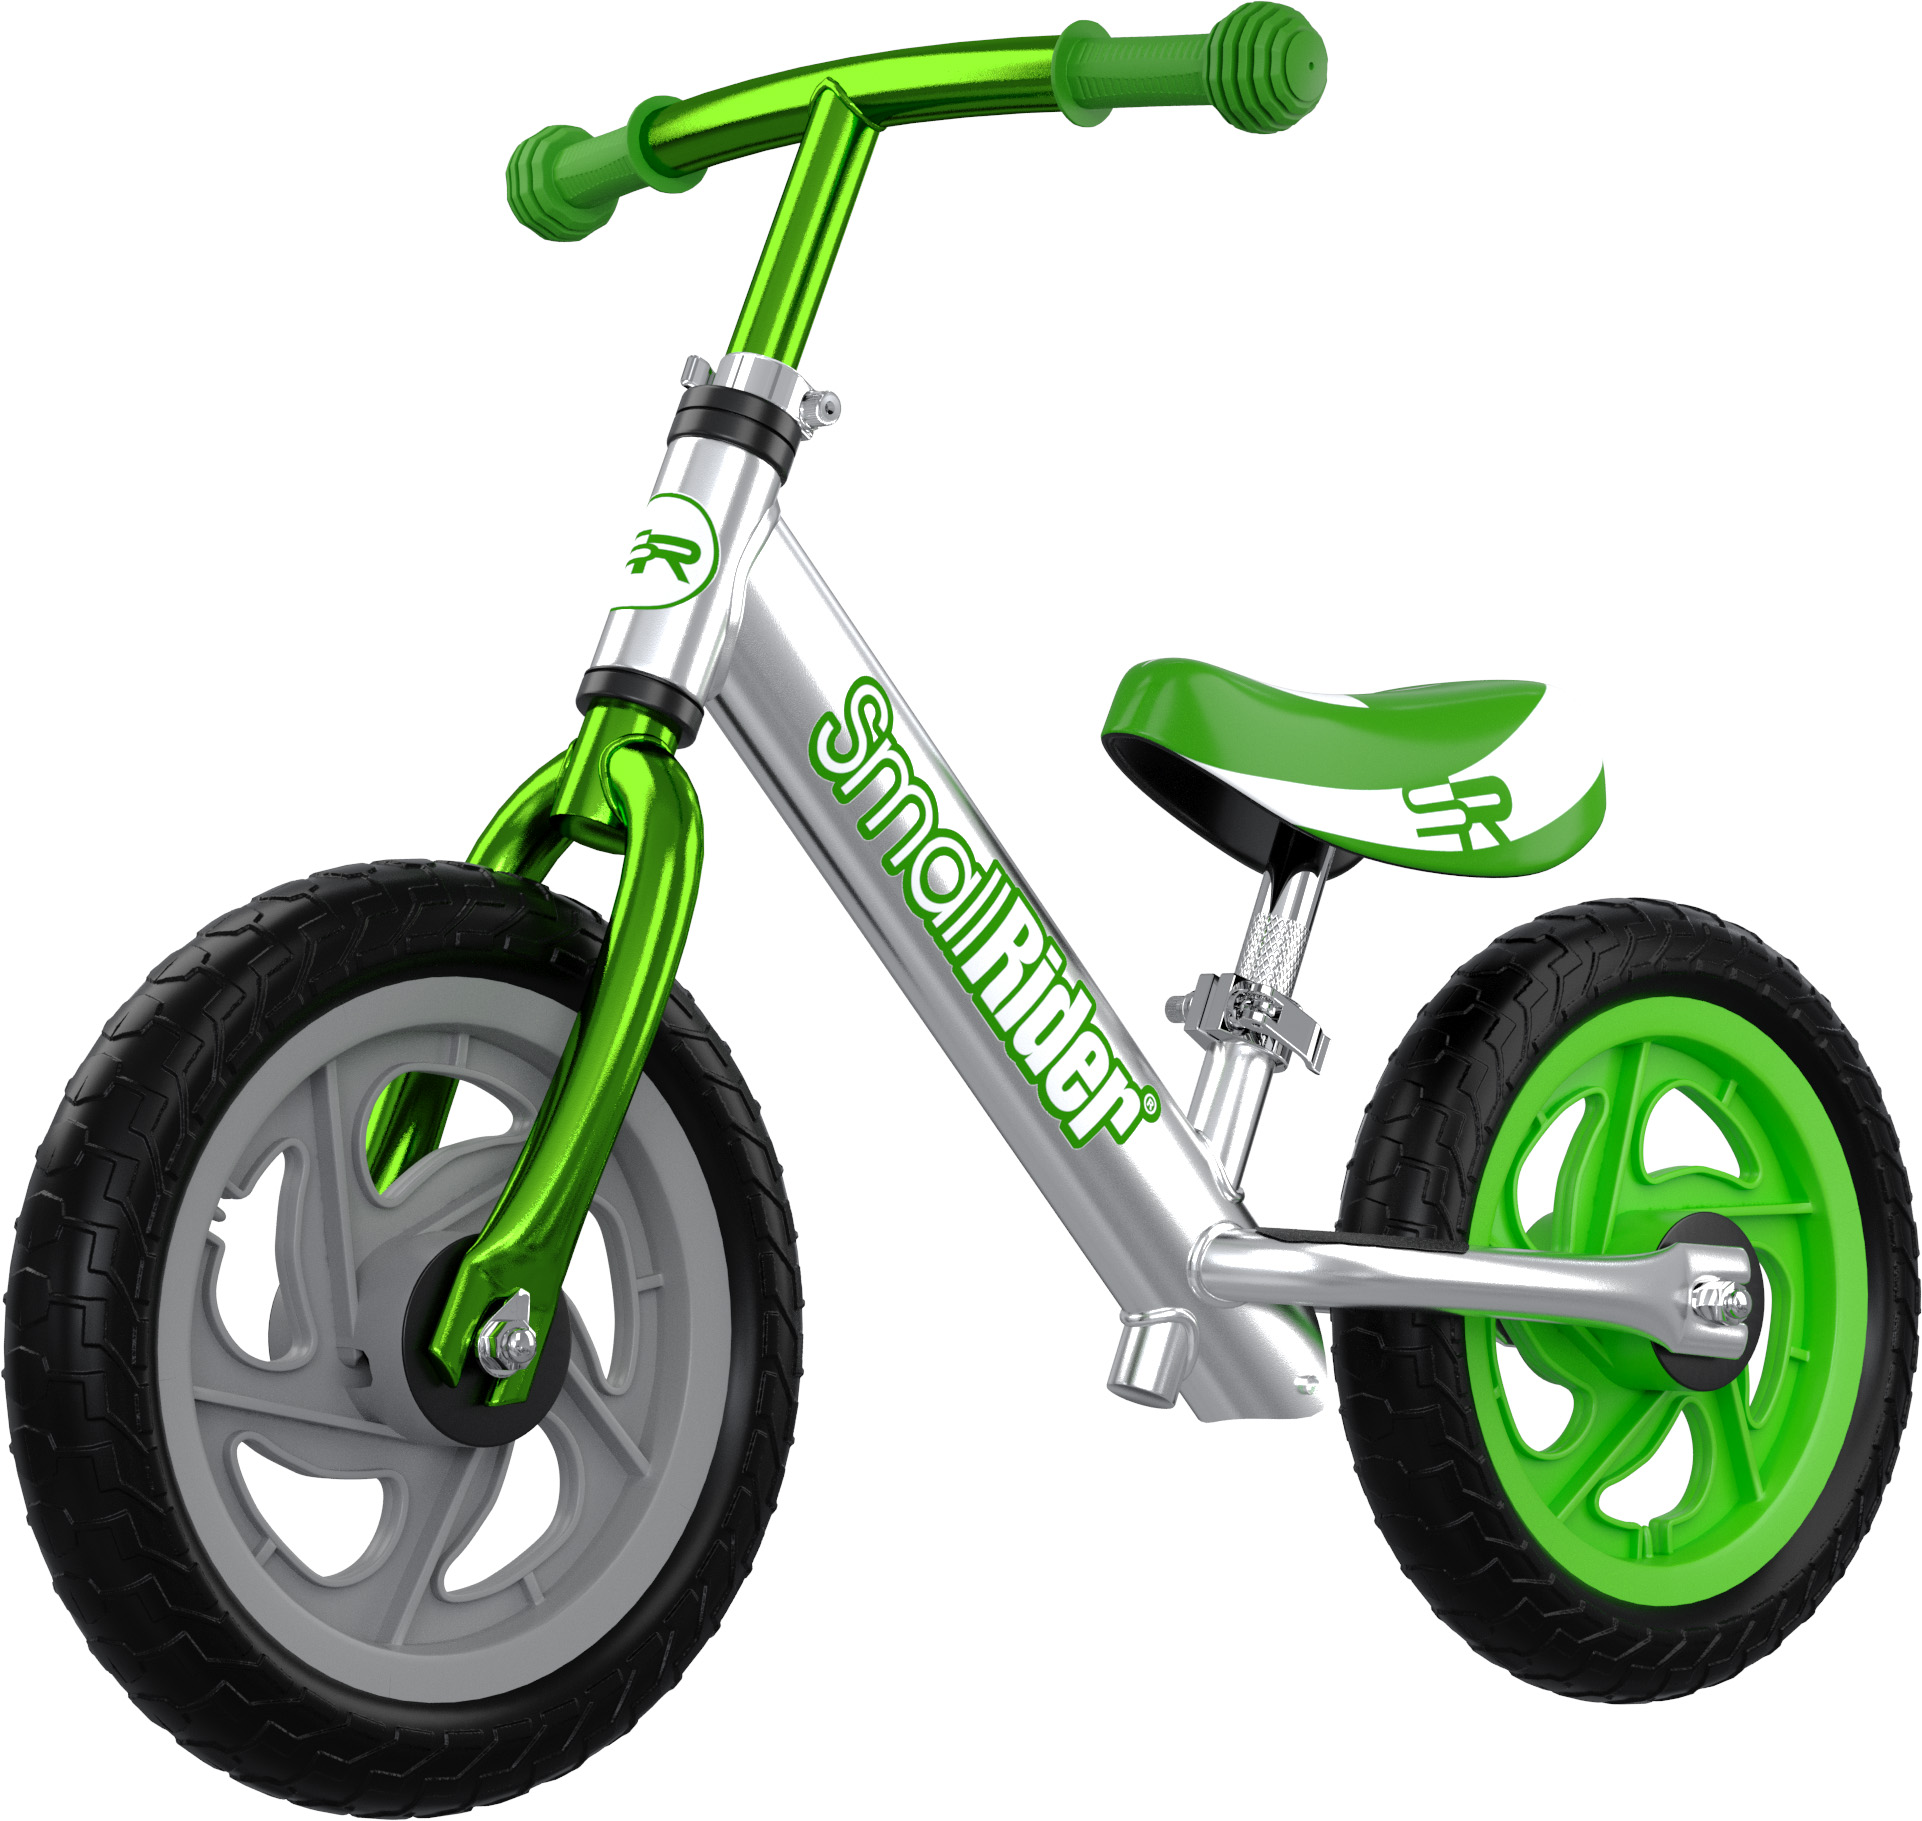 Беговел Small Rider Foot Racer 3 EVA MEGA0011 зеленый беговел со спец эффектами small rider nitro зеленый